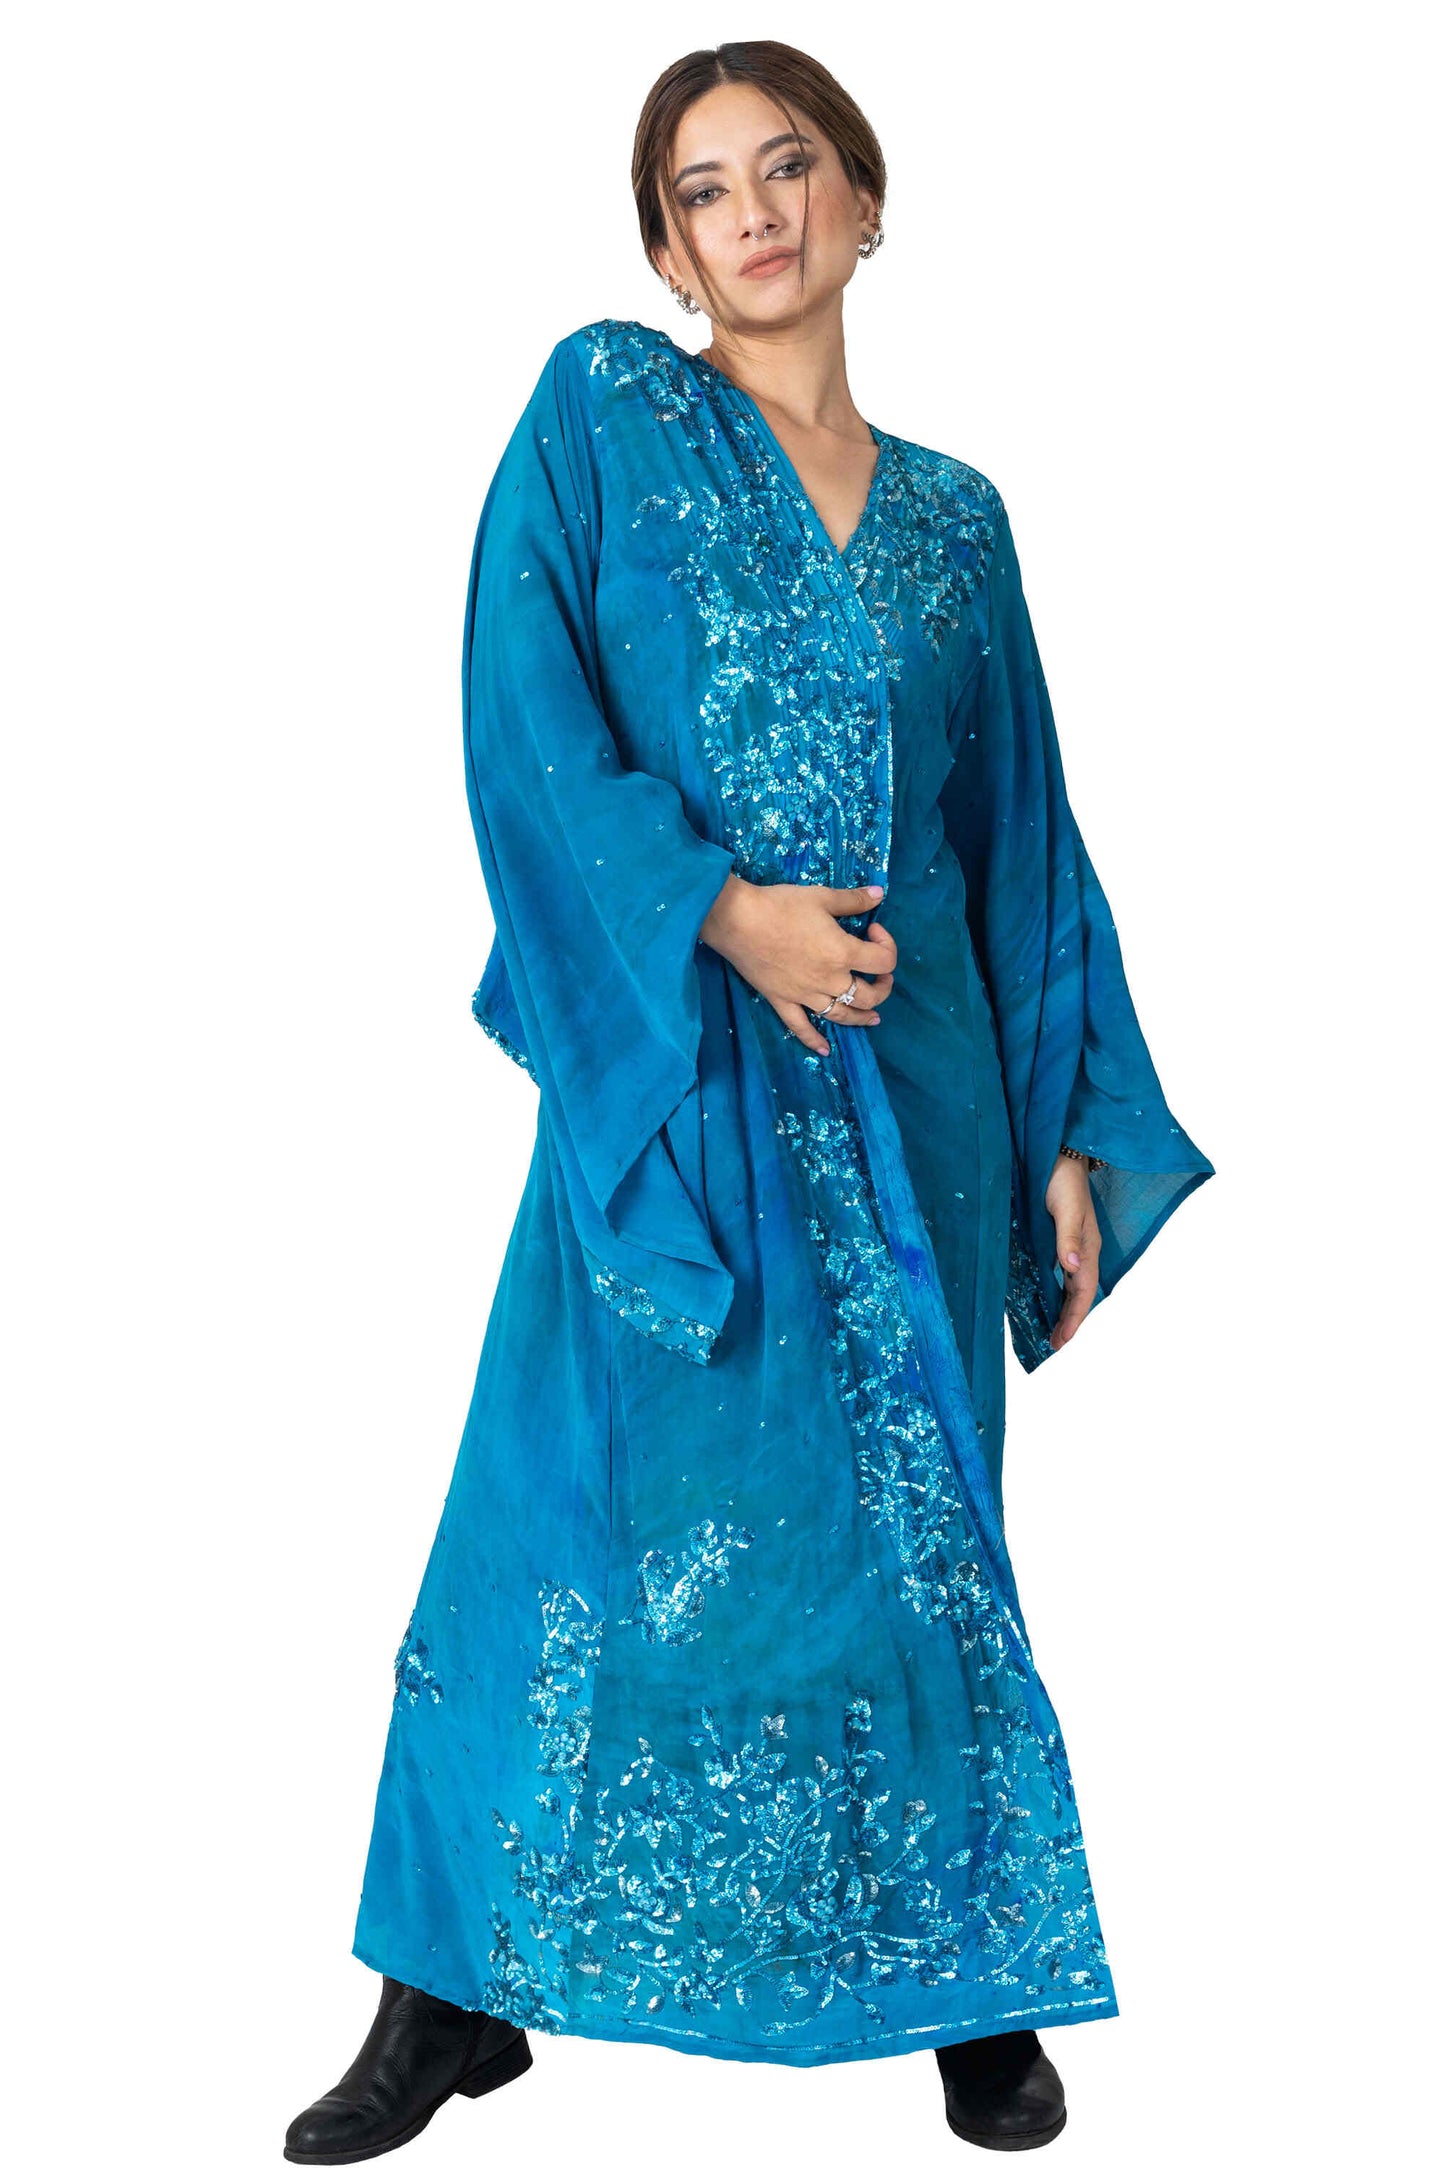 Kimono robe LUV